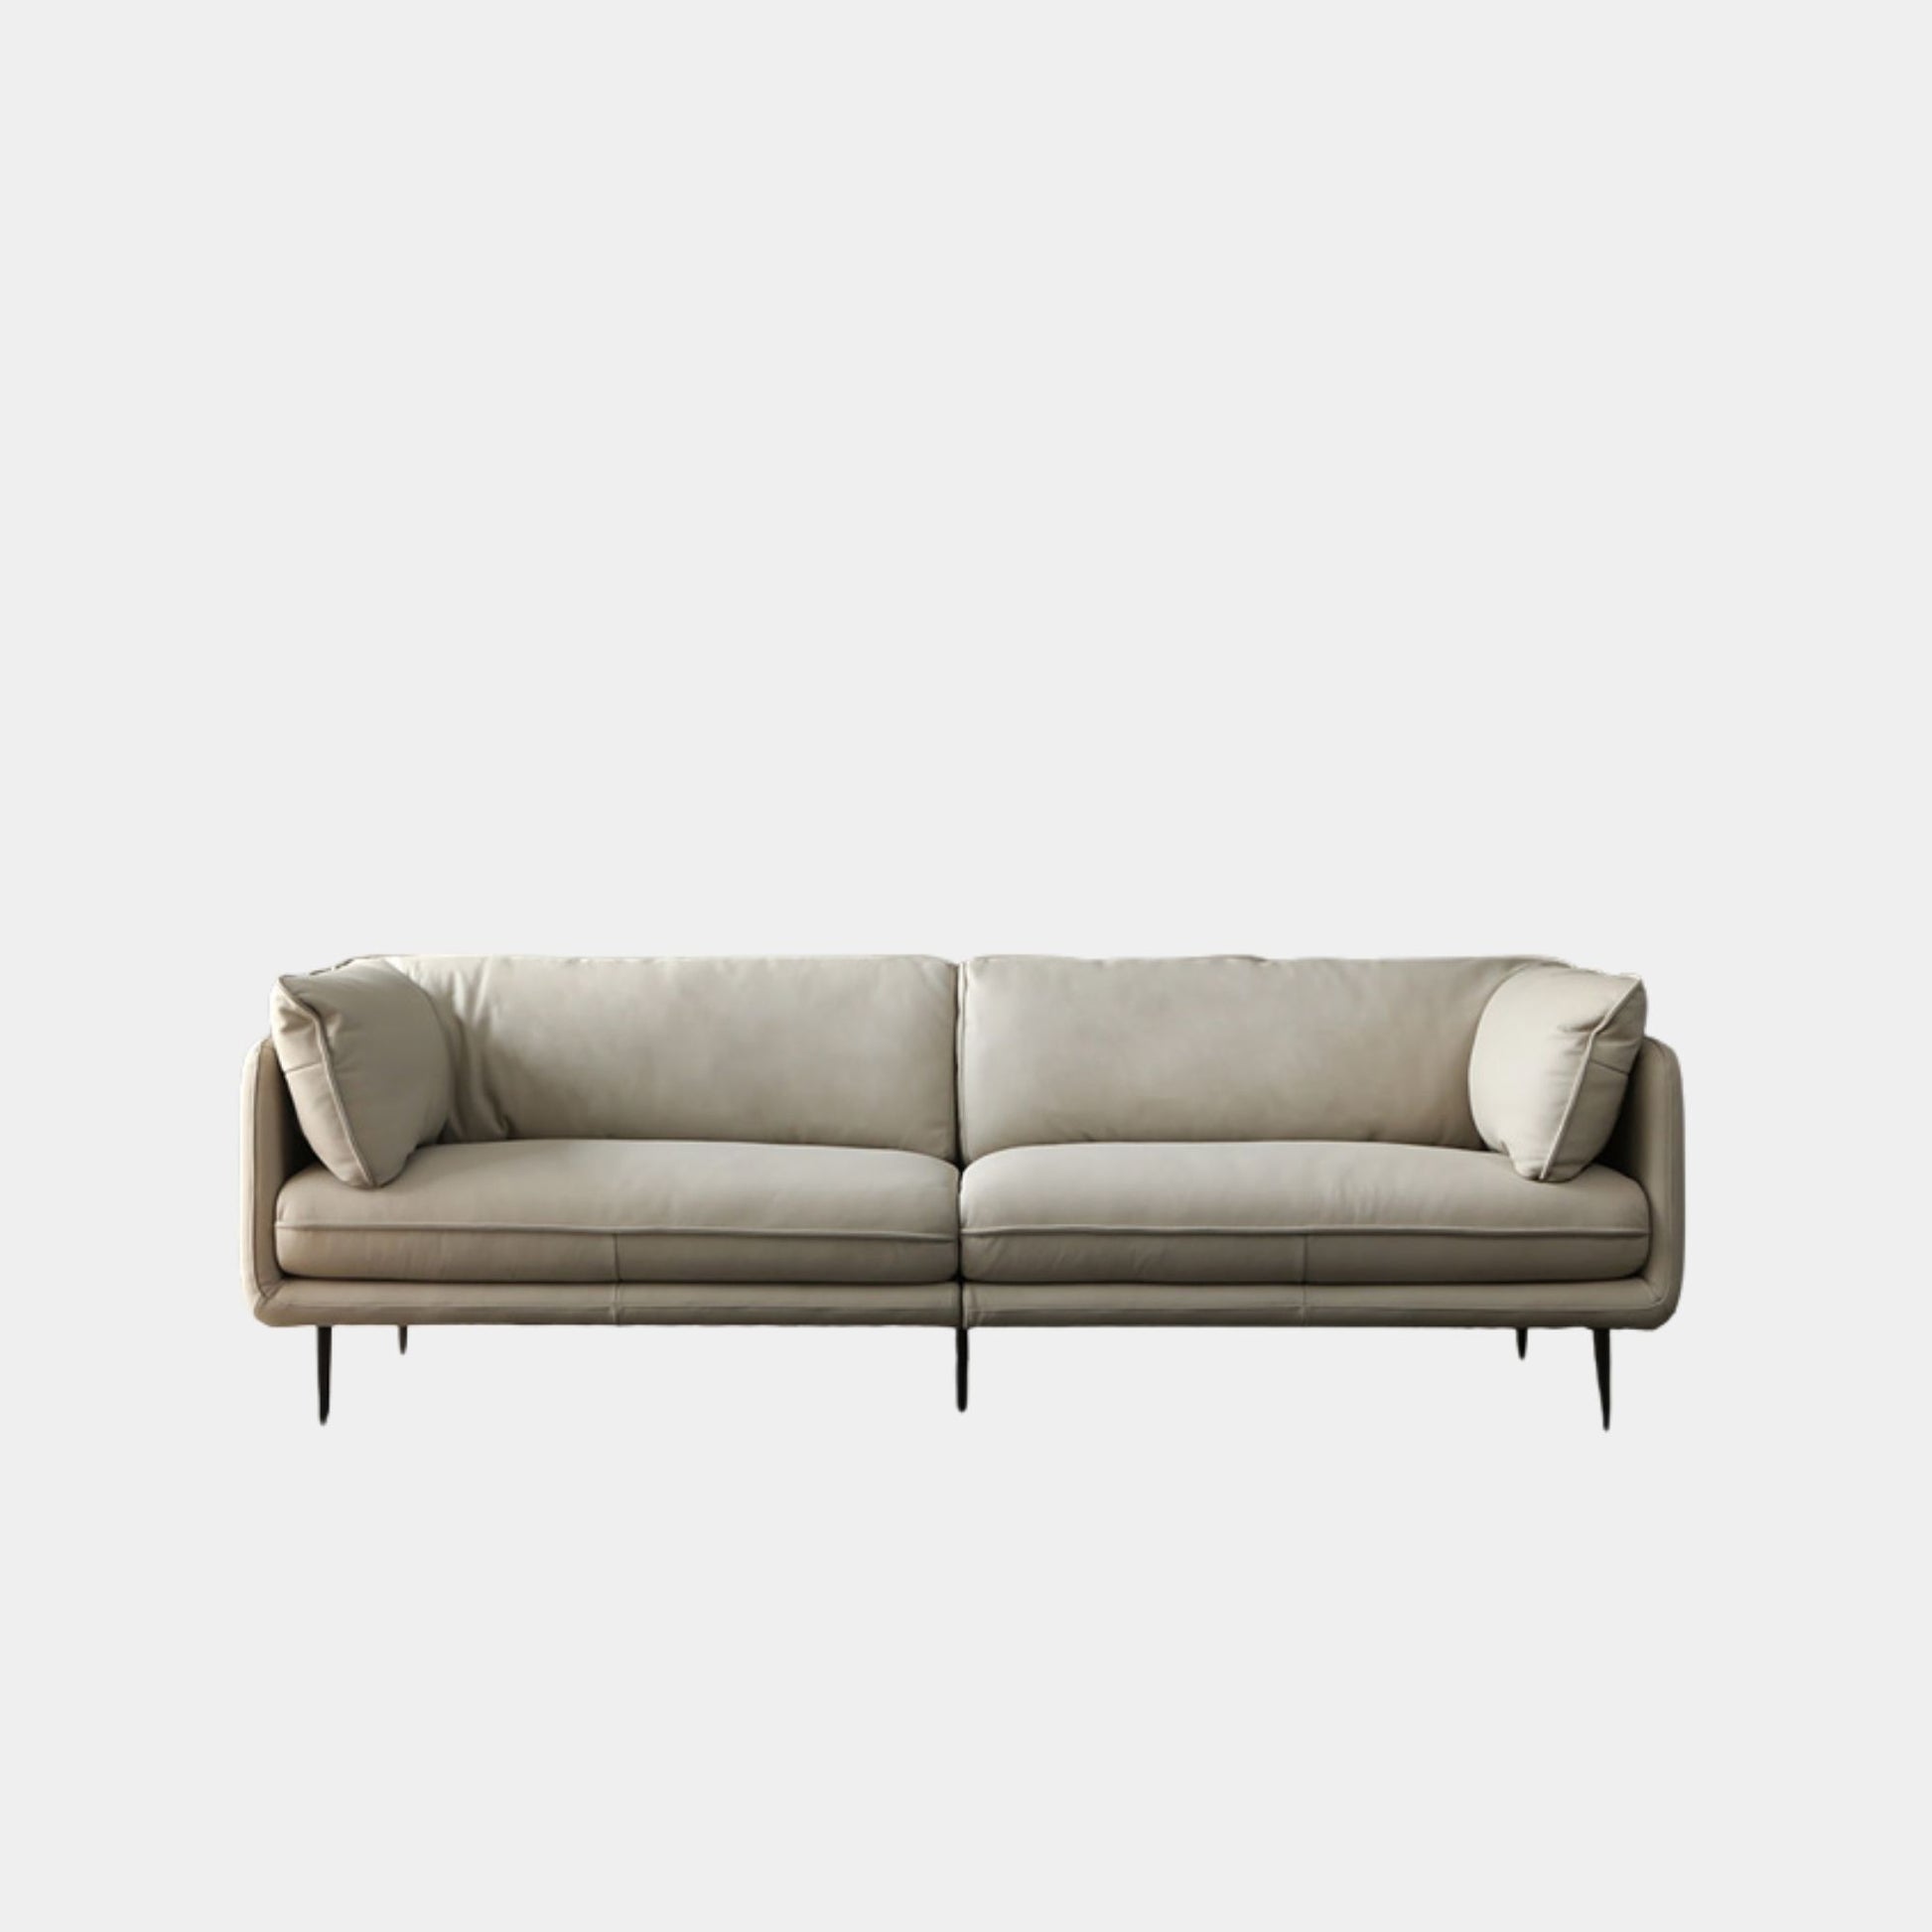 Cuddle full leather sofa white